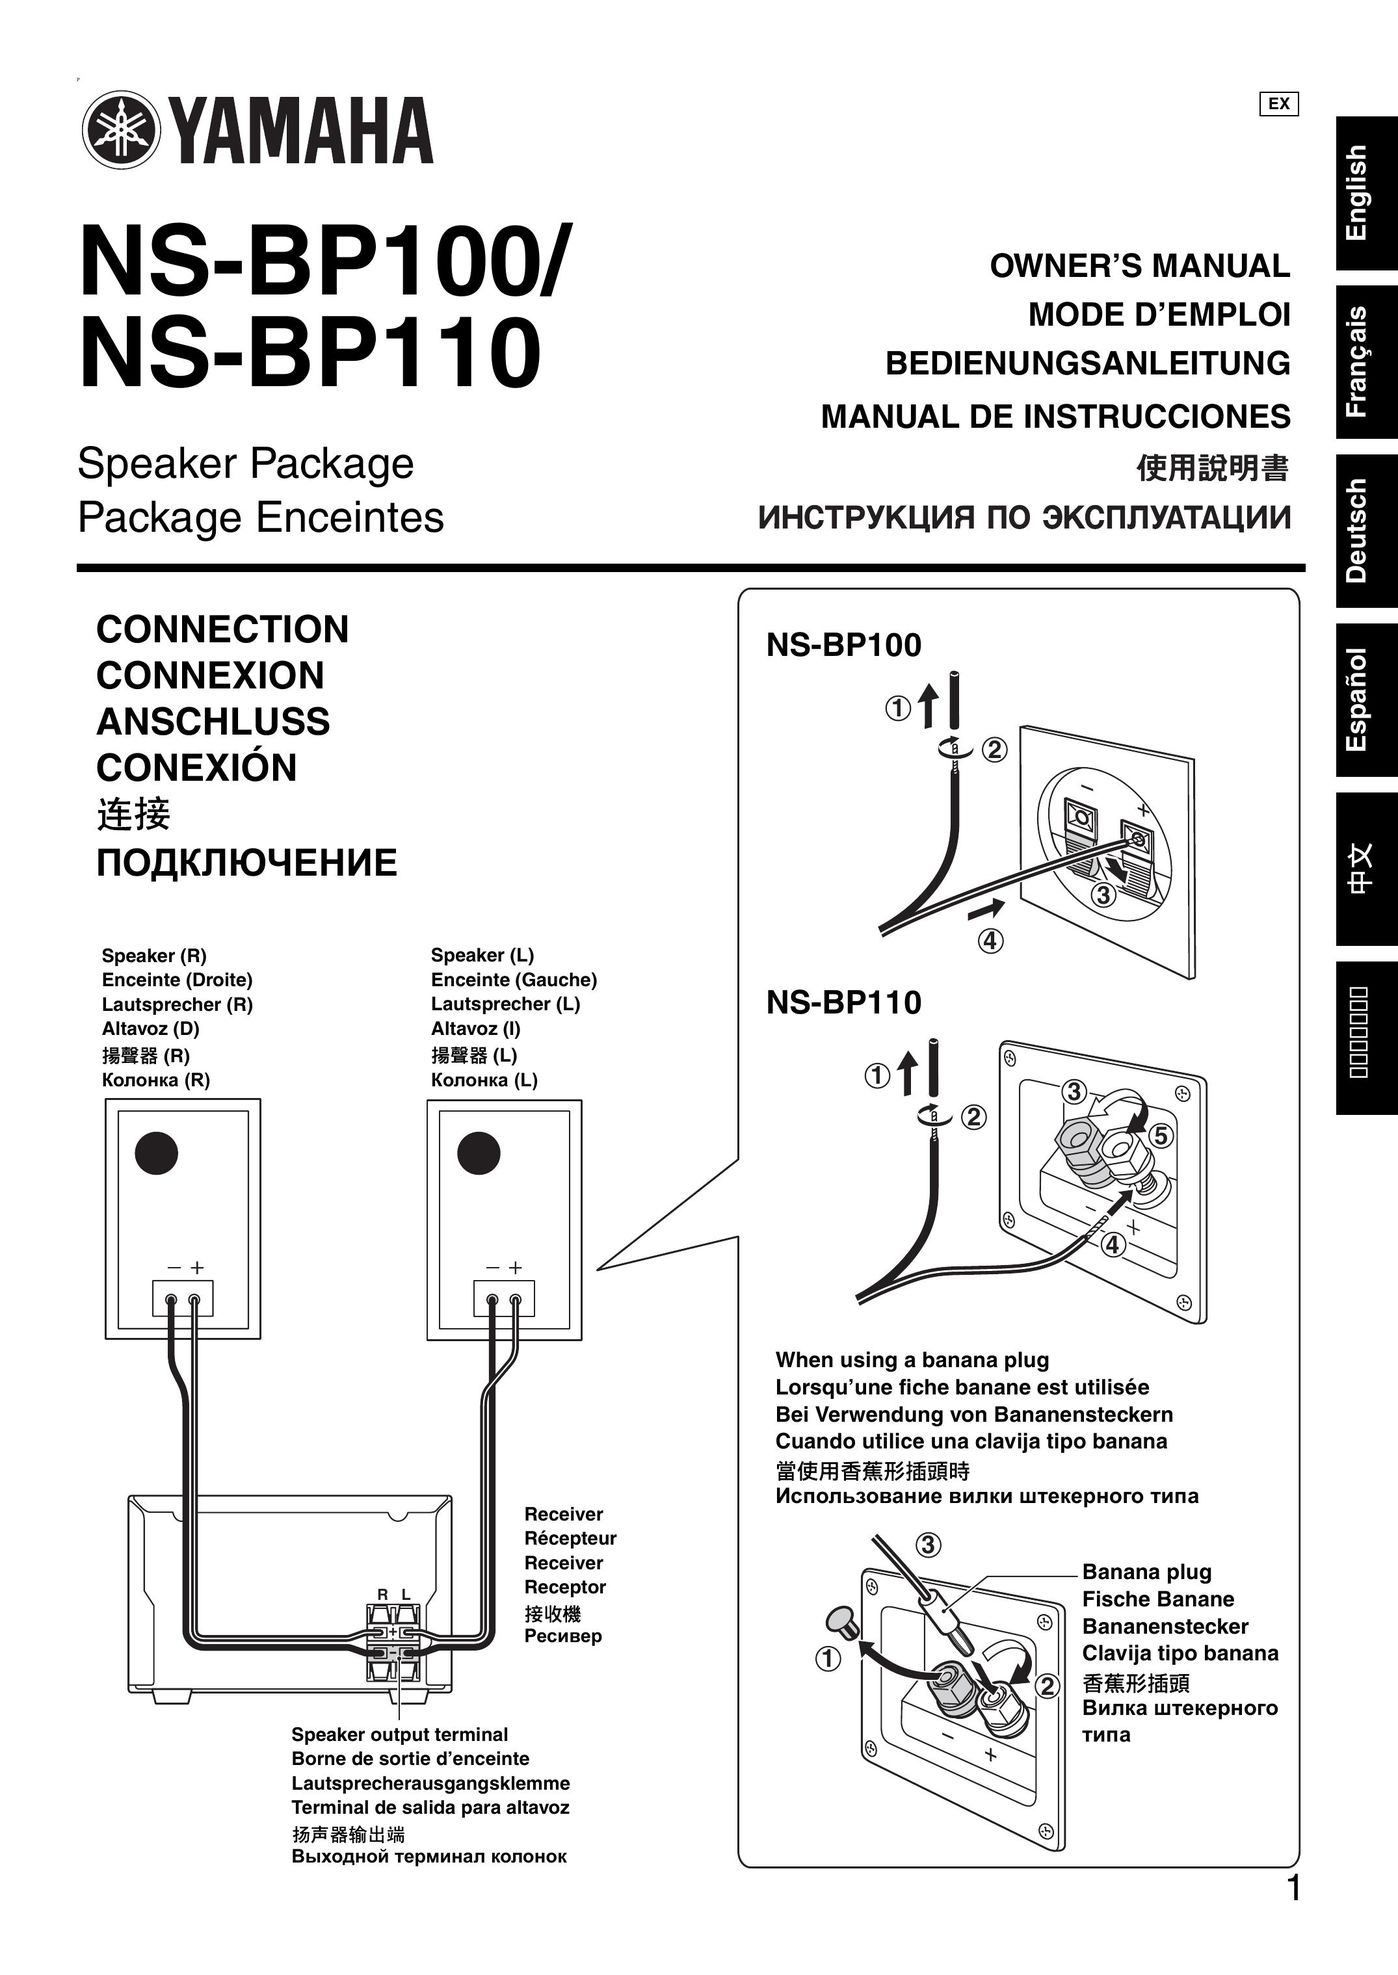 Yamaha NS-BP110 Speaker System User Manual